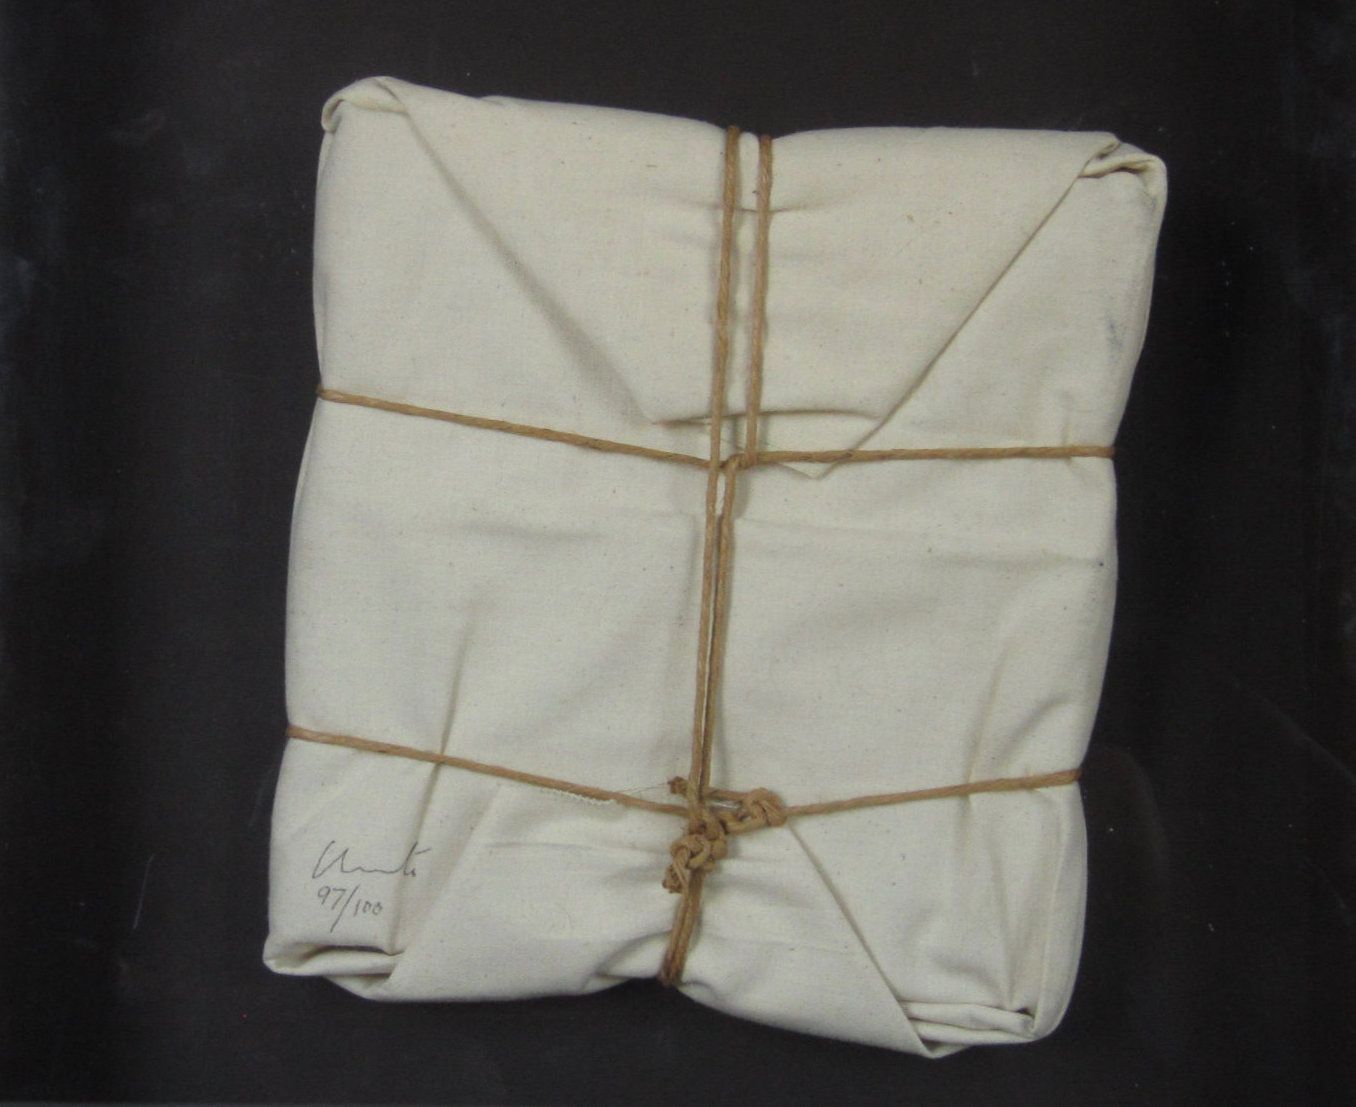 Christo, Wrapped Book, 1973